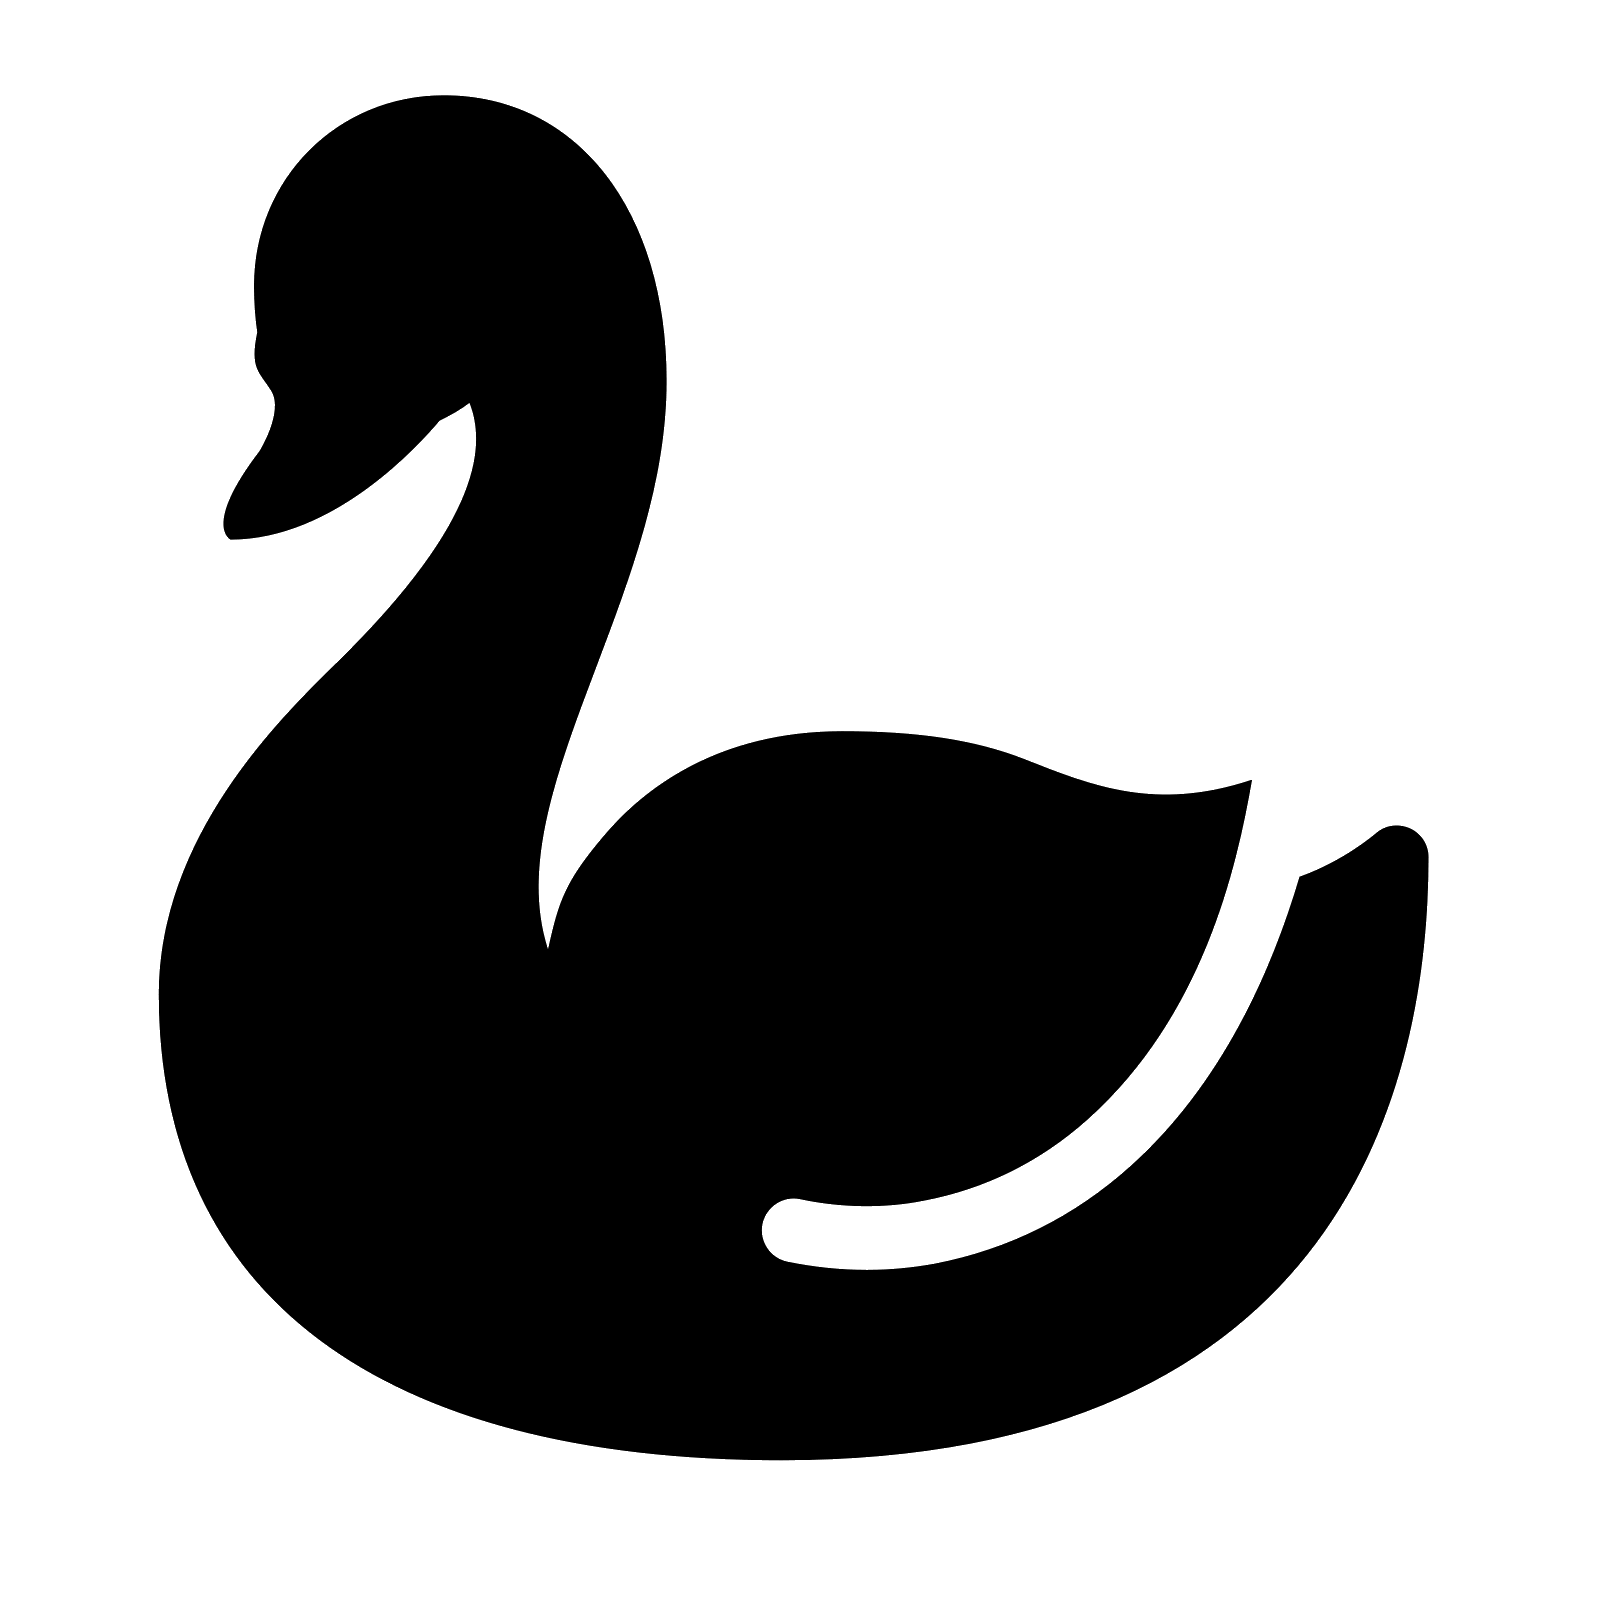 Black Swan Icon stock vector. Illustration of clip, shape - 35163490